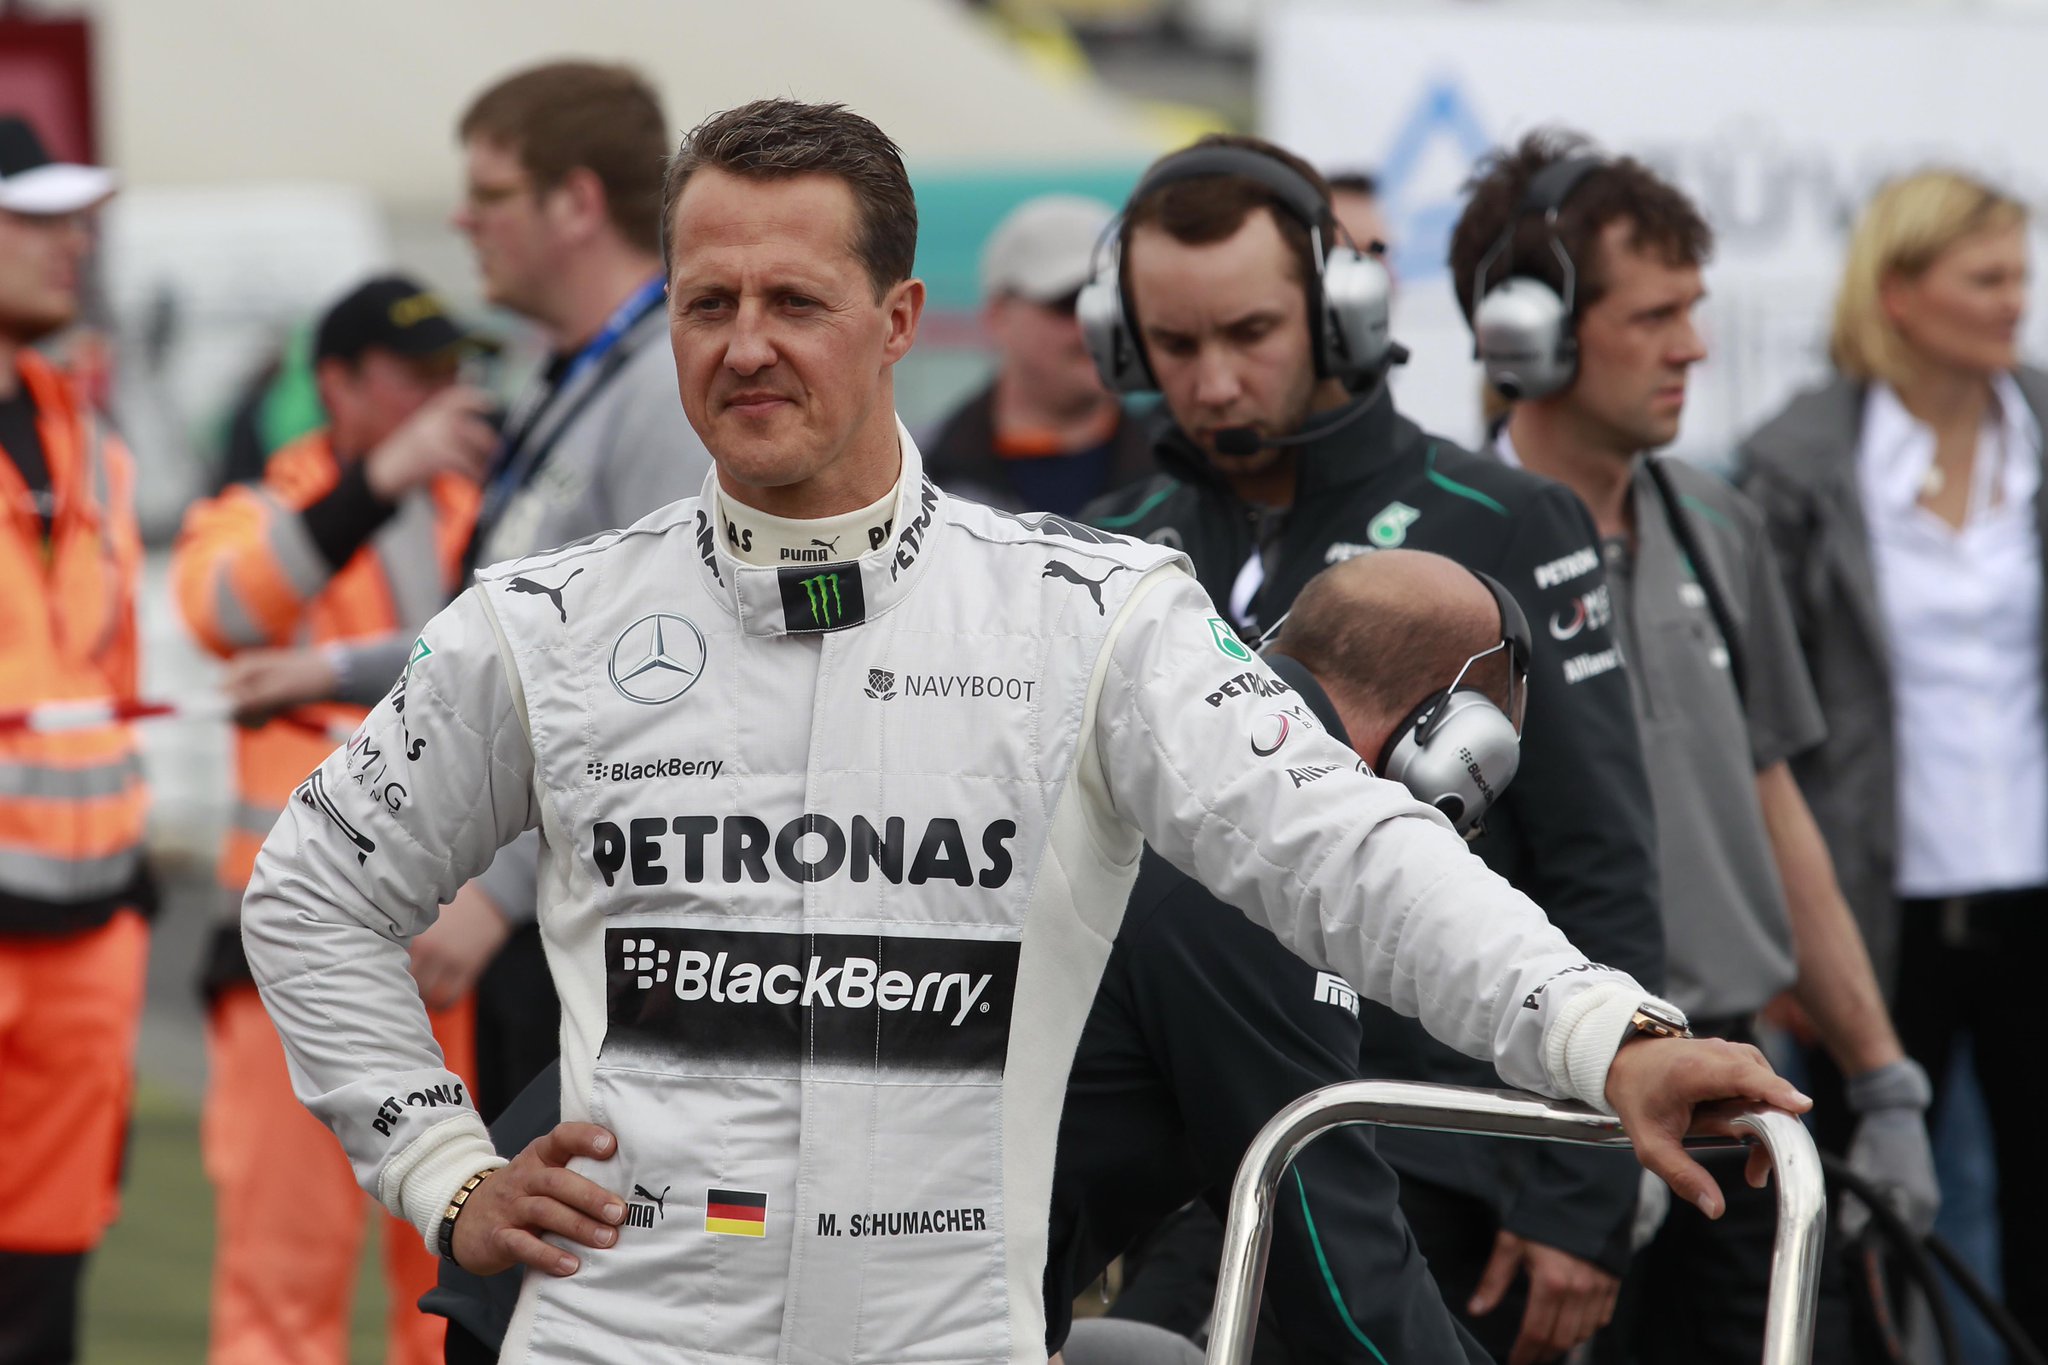 Happy birthday to Michael Schumacher who turns 49 today 